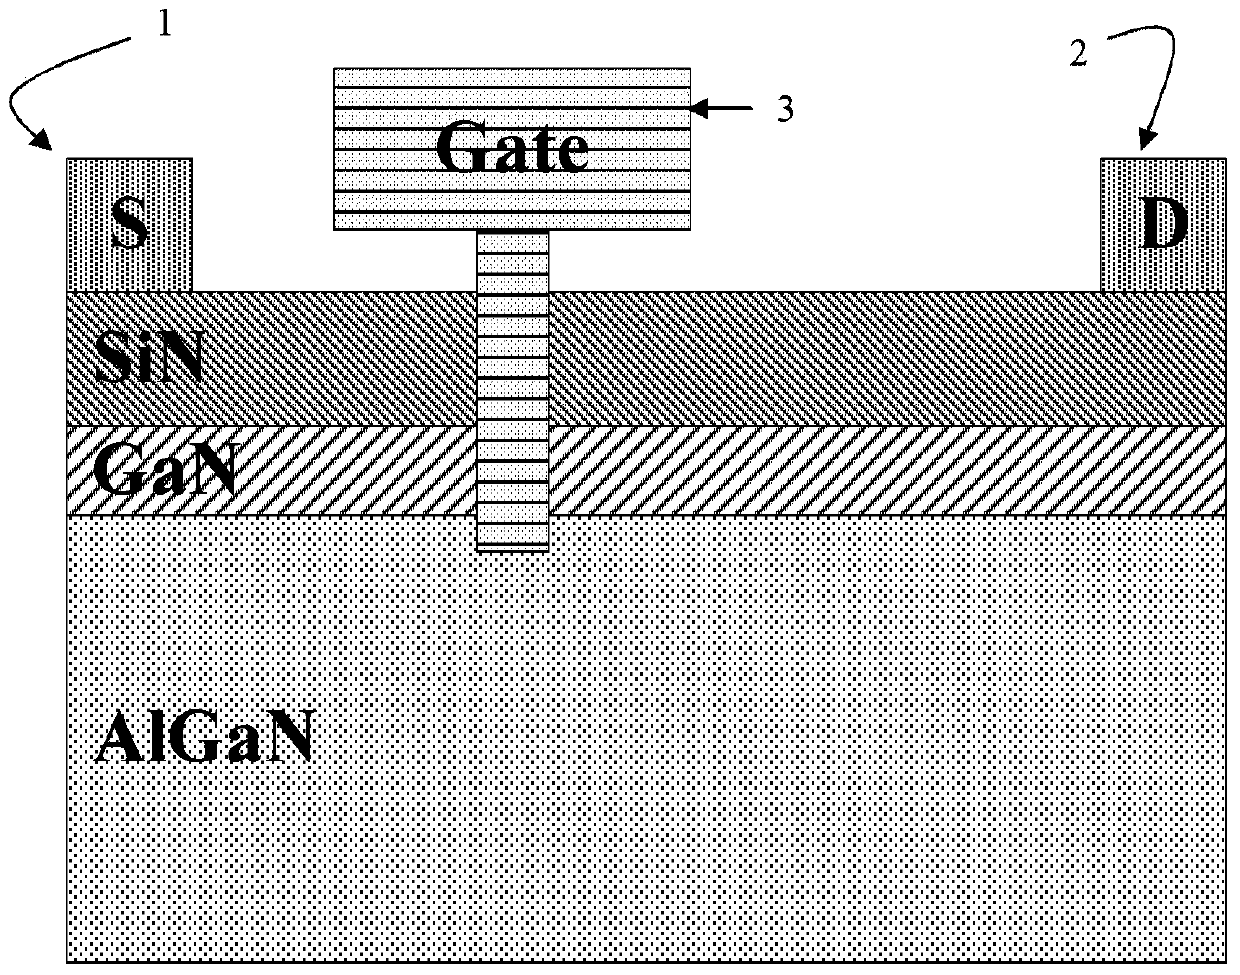 Manufacturing method of T-shaped gate of GaN-based FET (Field Effect Transistor)